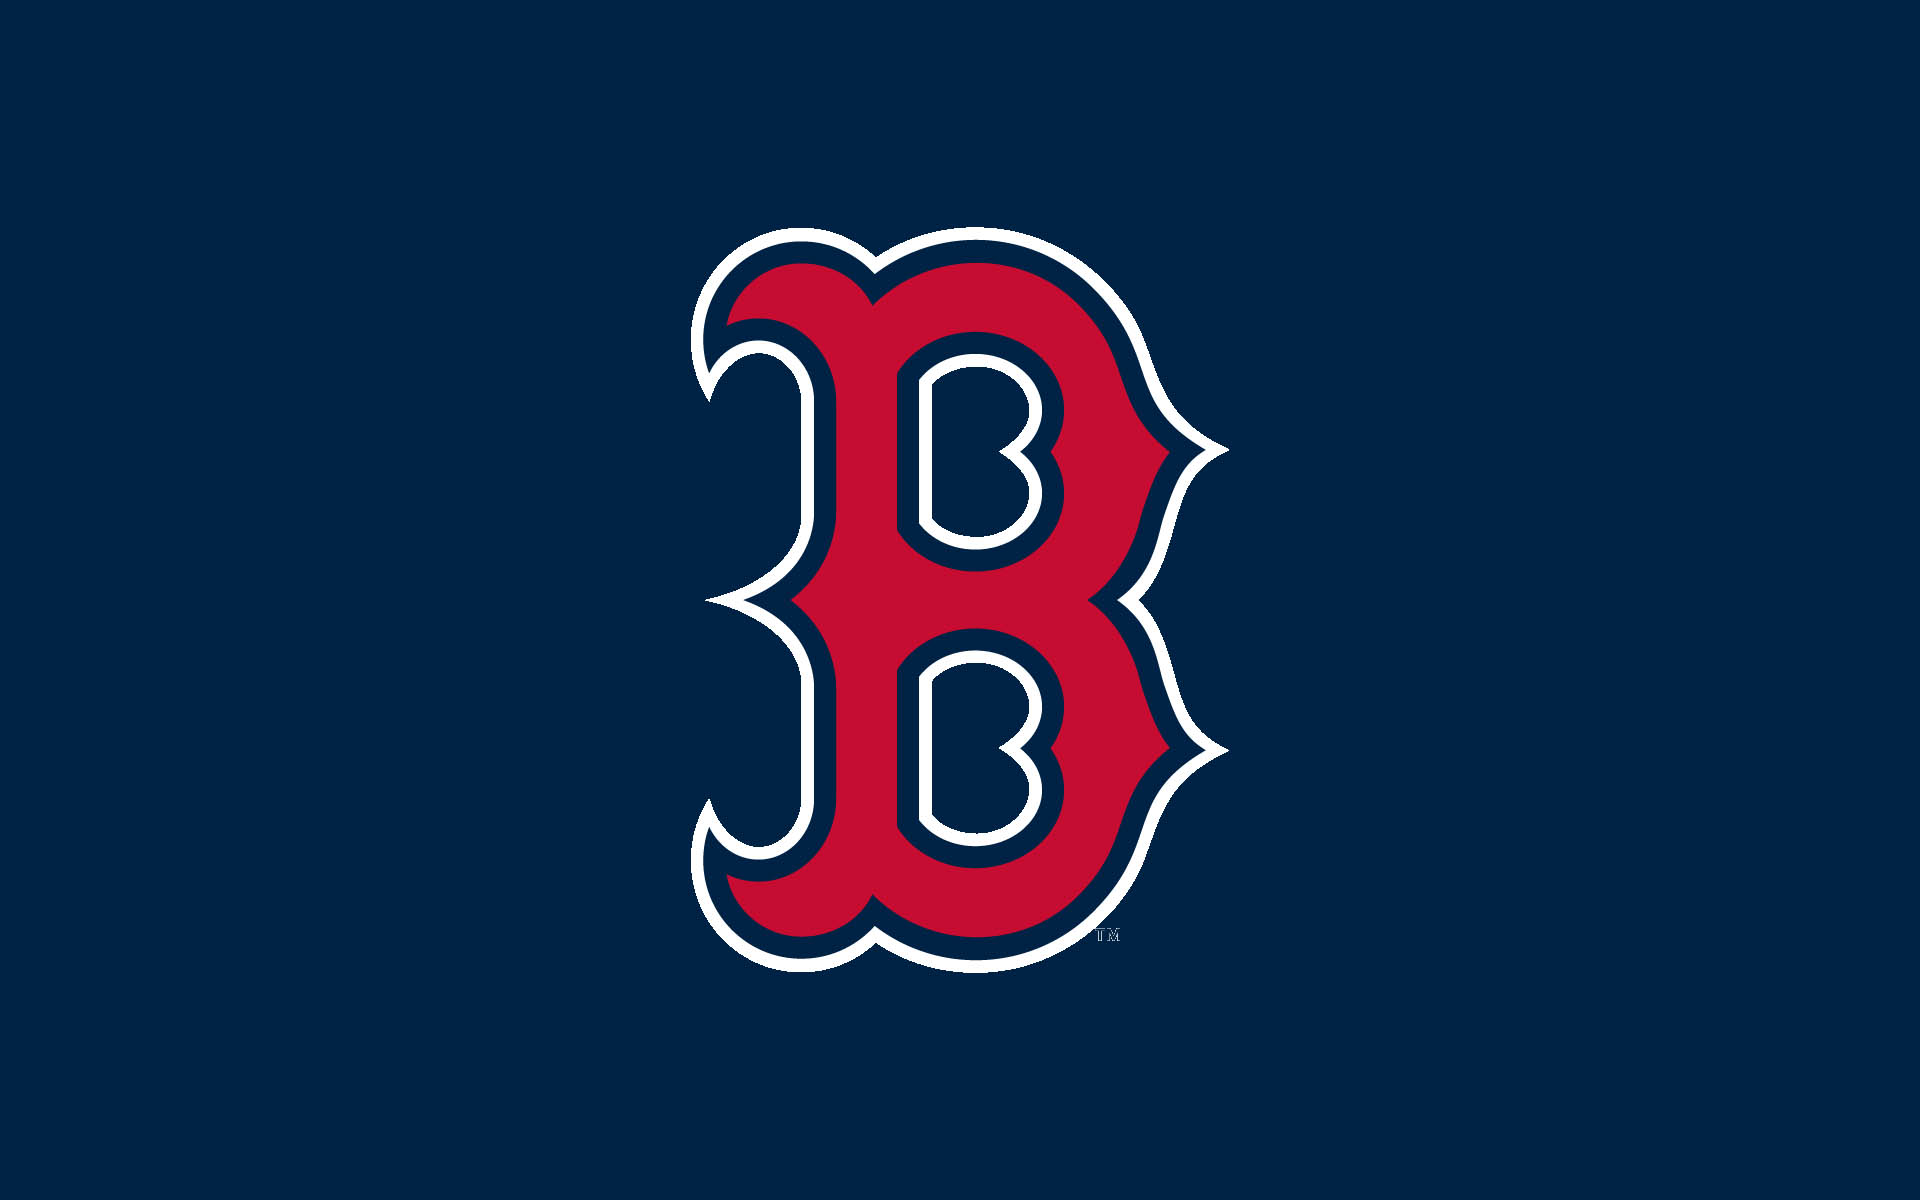 Boston Red Sox Logo Wallpaper - Cliparts.co